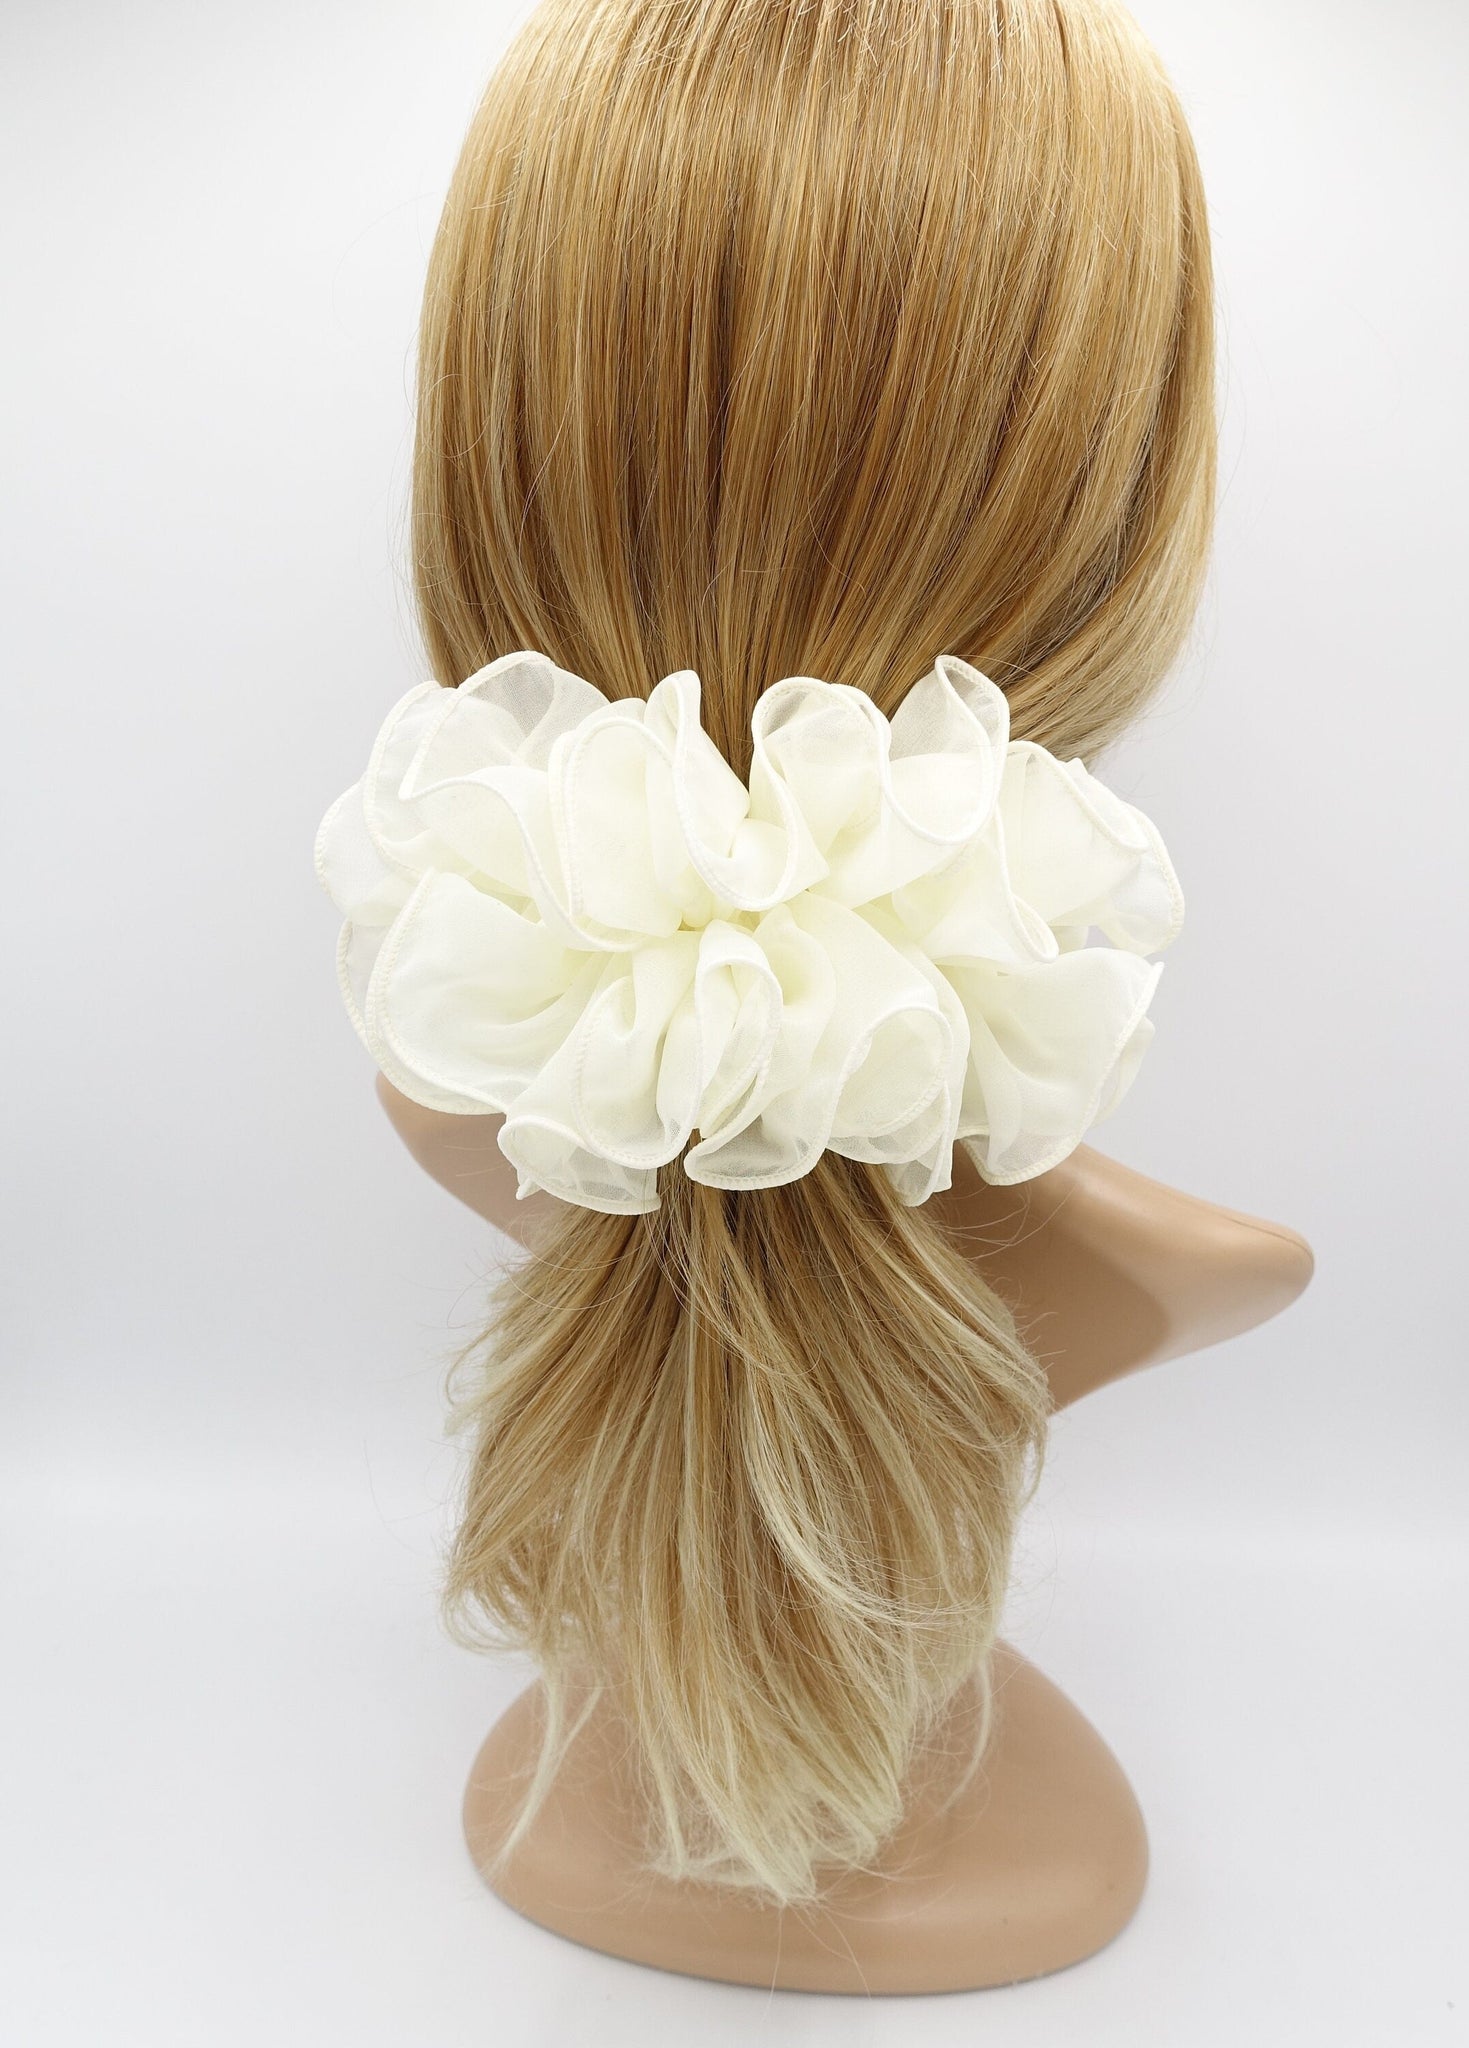 veryshine.com Barrette (Bow) Cream white chiffon ruffle flower hair barrette woman hair accessory